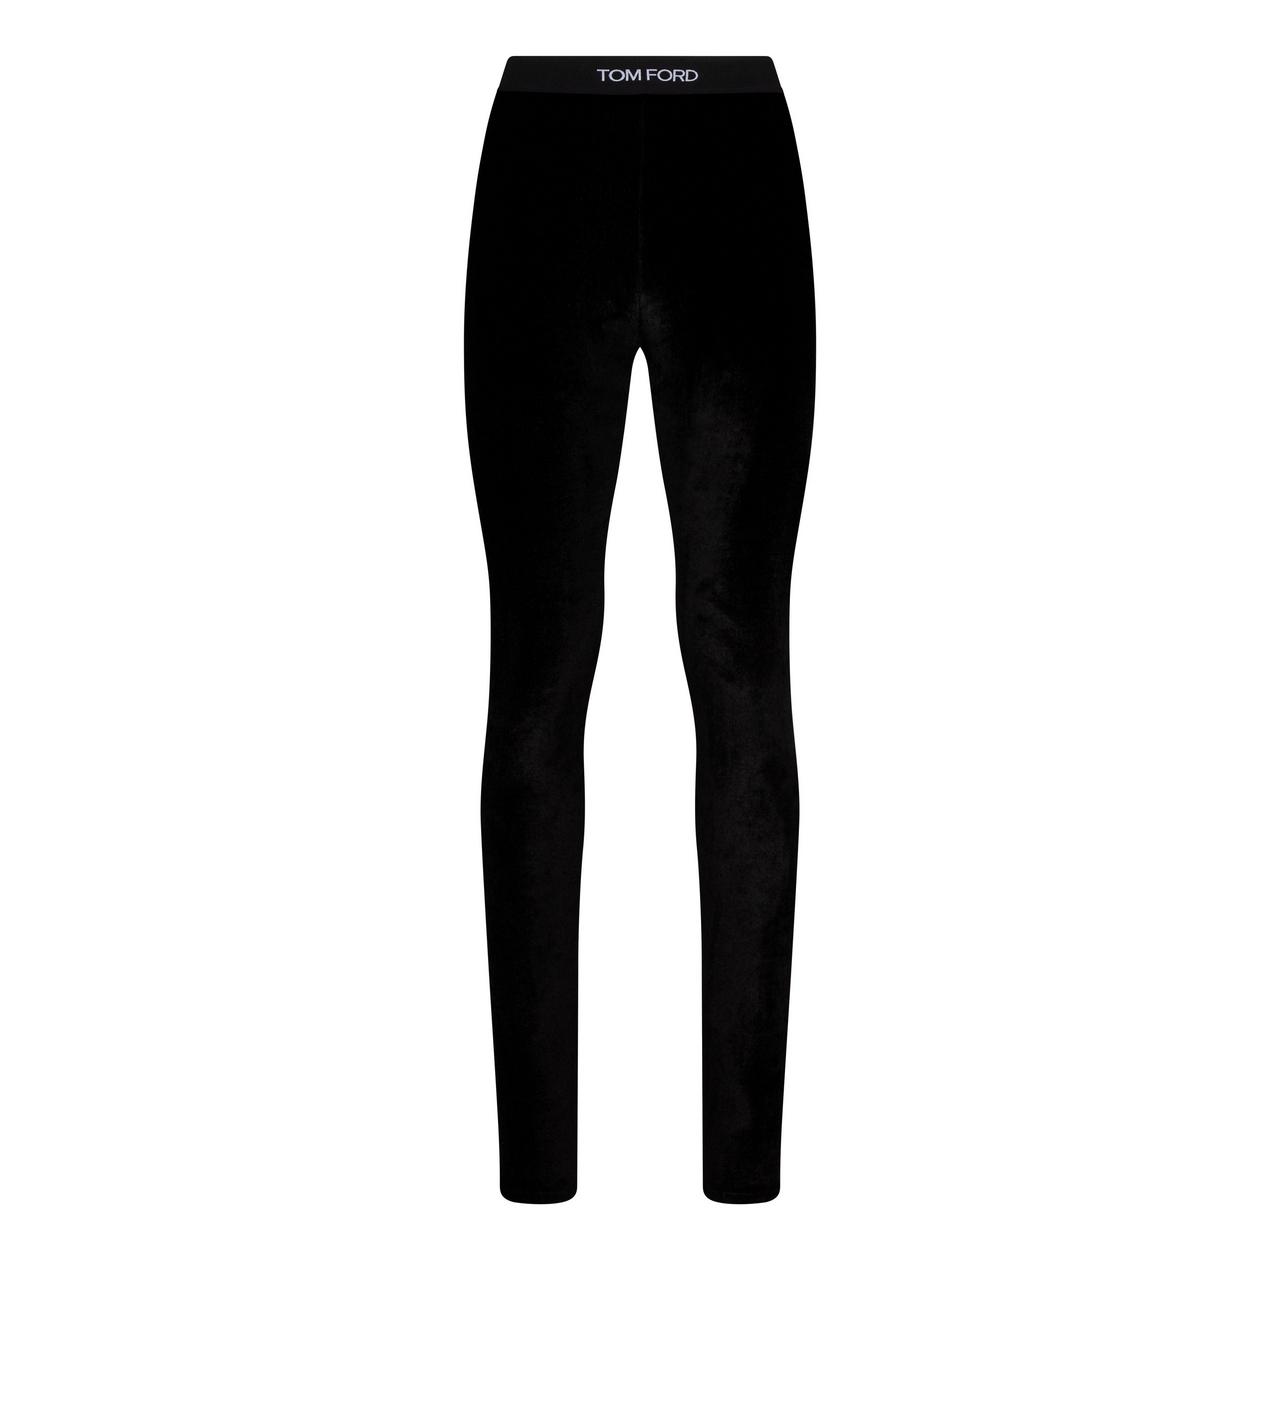 TOM FORD - Black Stretch Miniskirt  Black stretch, Stretch leggings, Mini  skirts